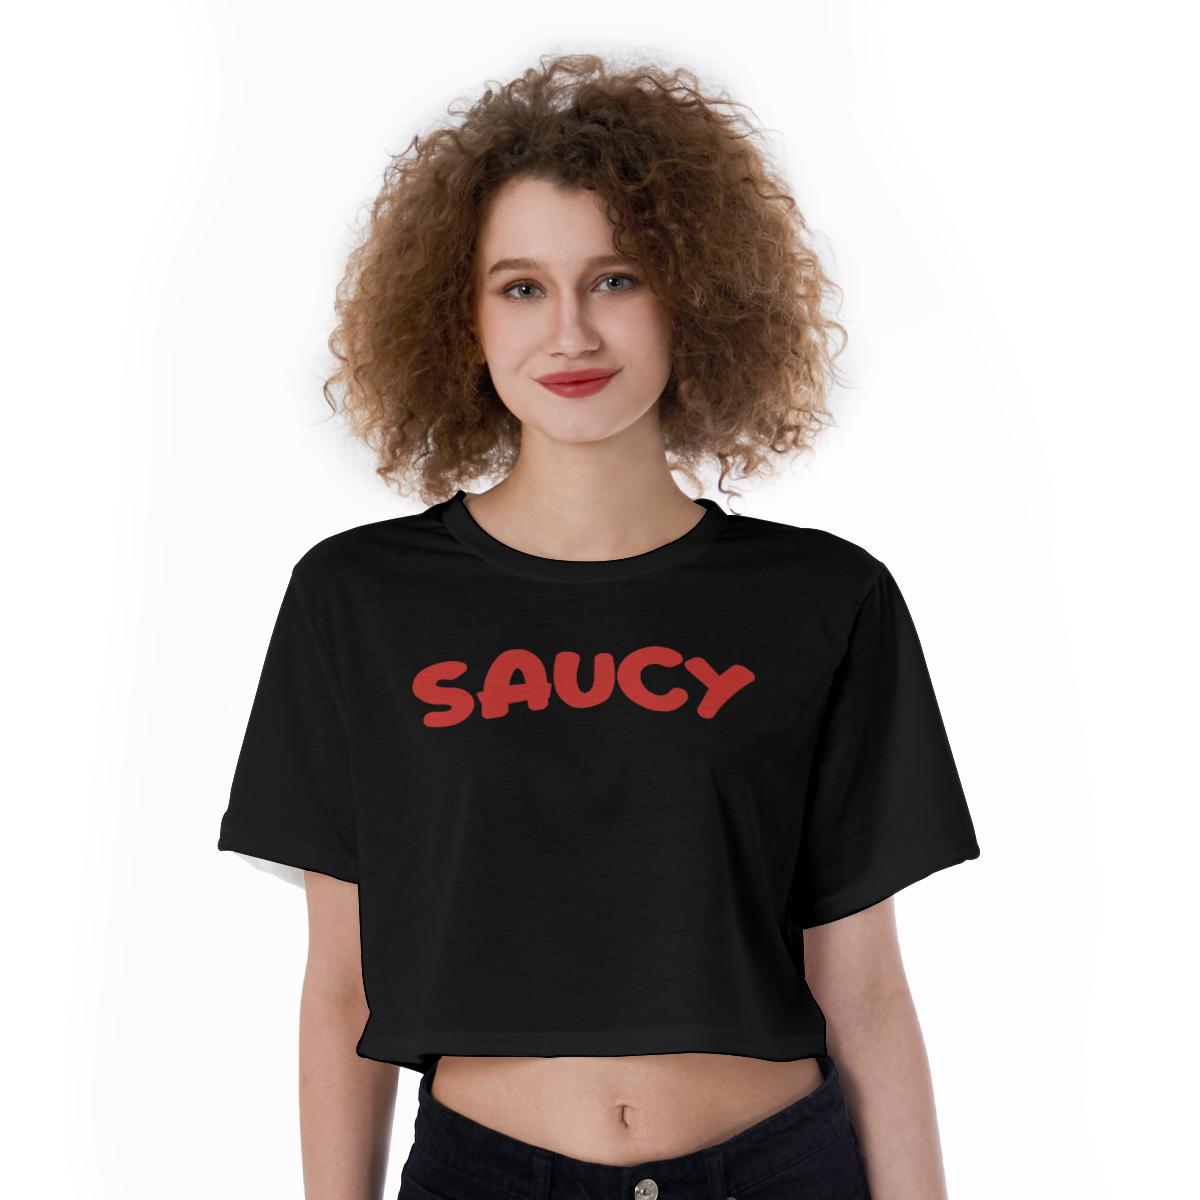 Saucy Print Cropped T-Shirt, Saucy Print Crop Top